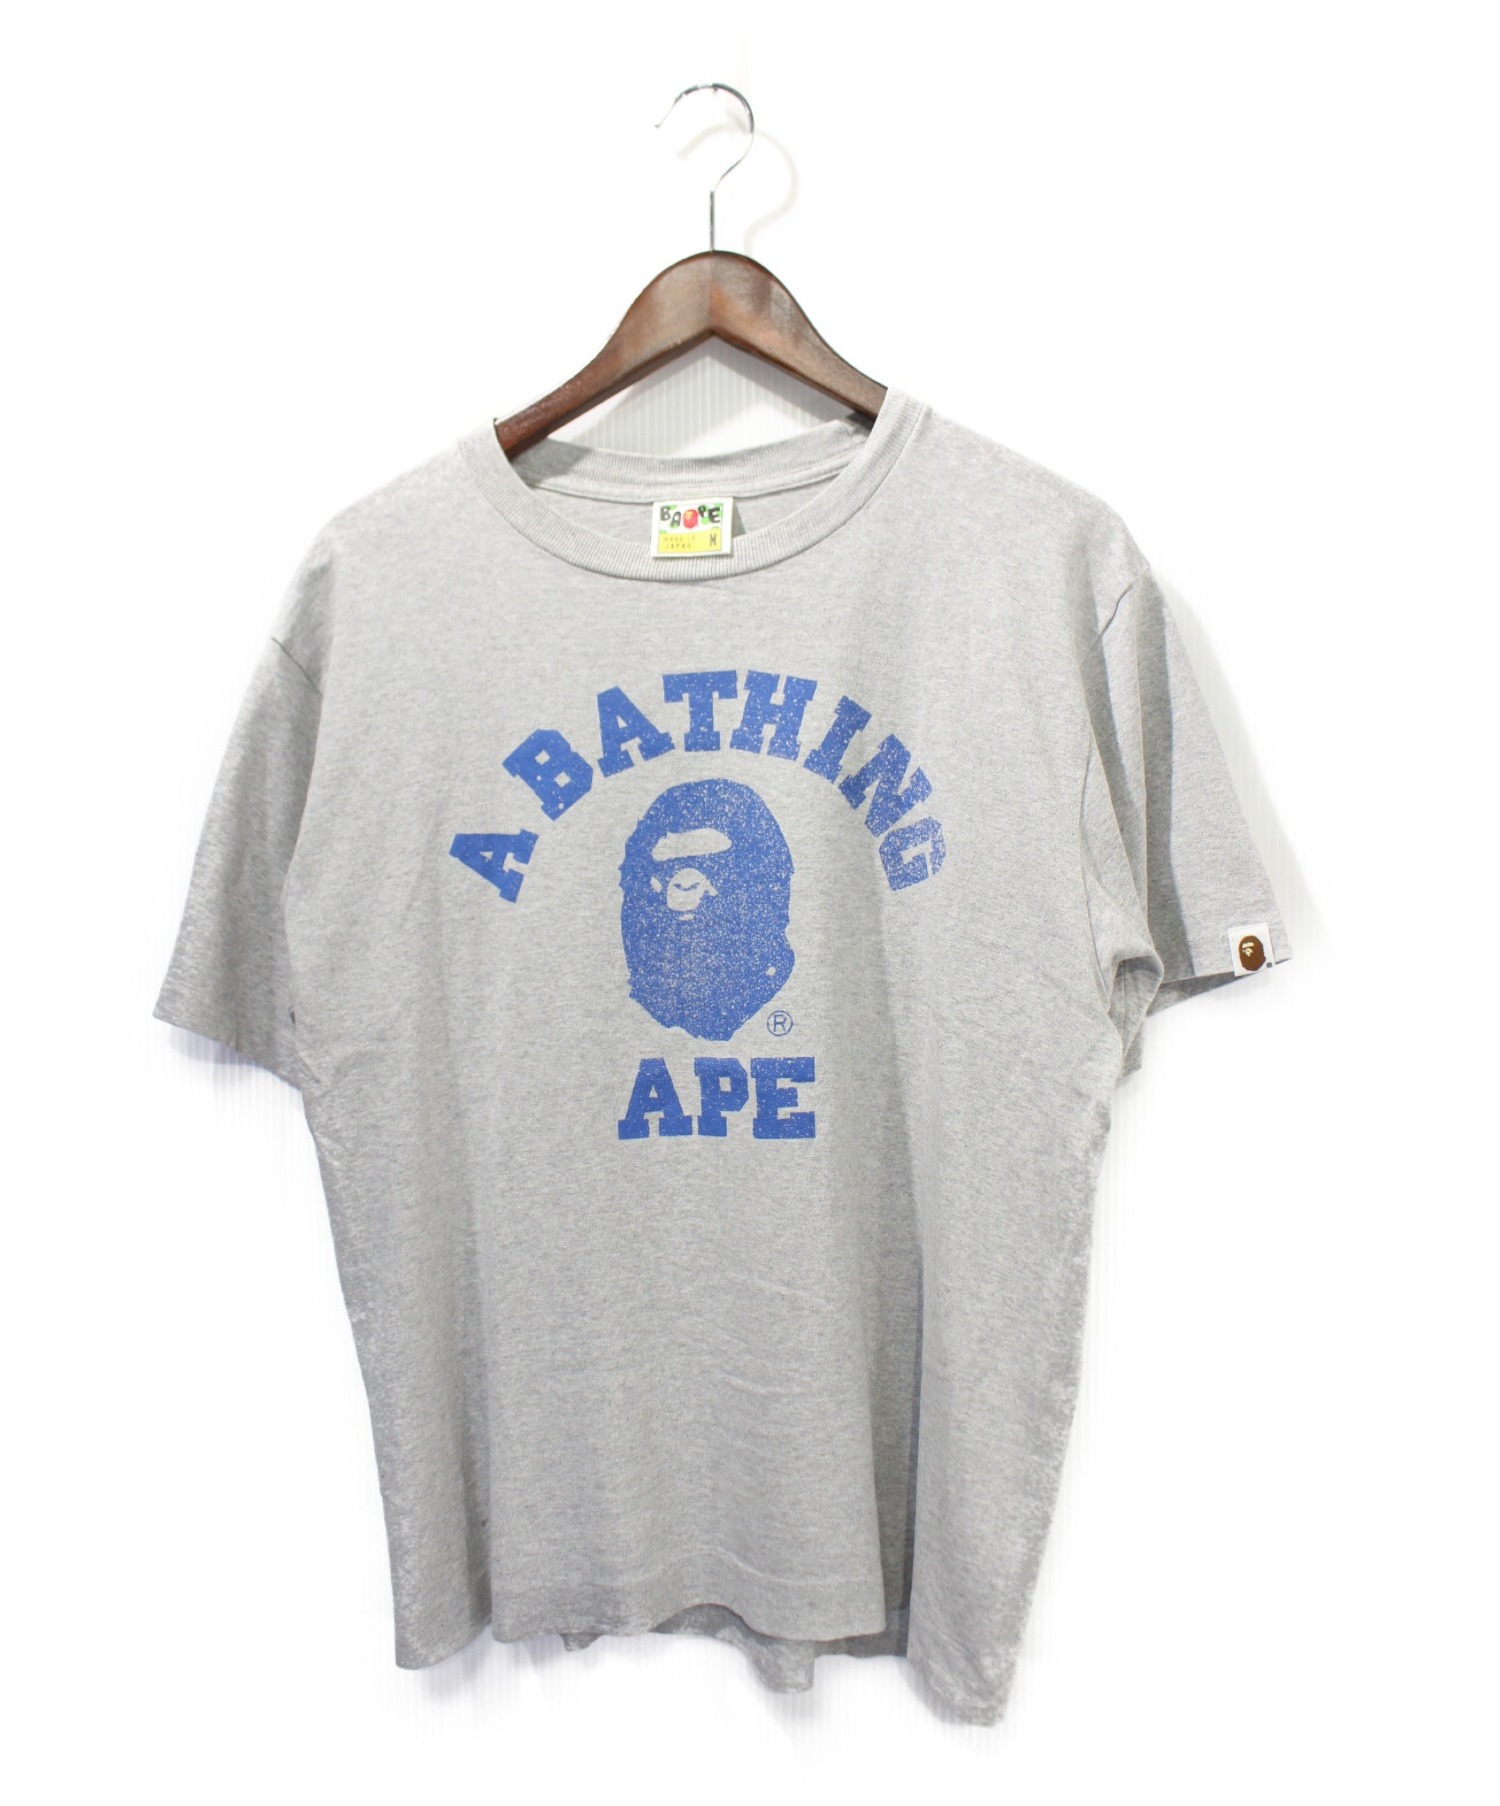 A BATHING APE (アベイシングエイプ) ヴィンテージ大猿ロゴTシャツ グレー サイズ:M